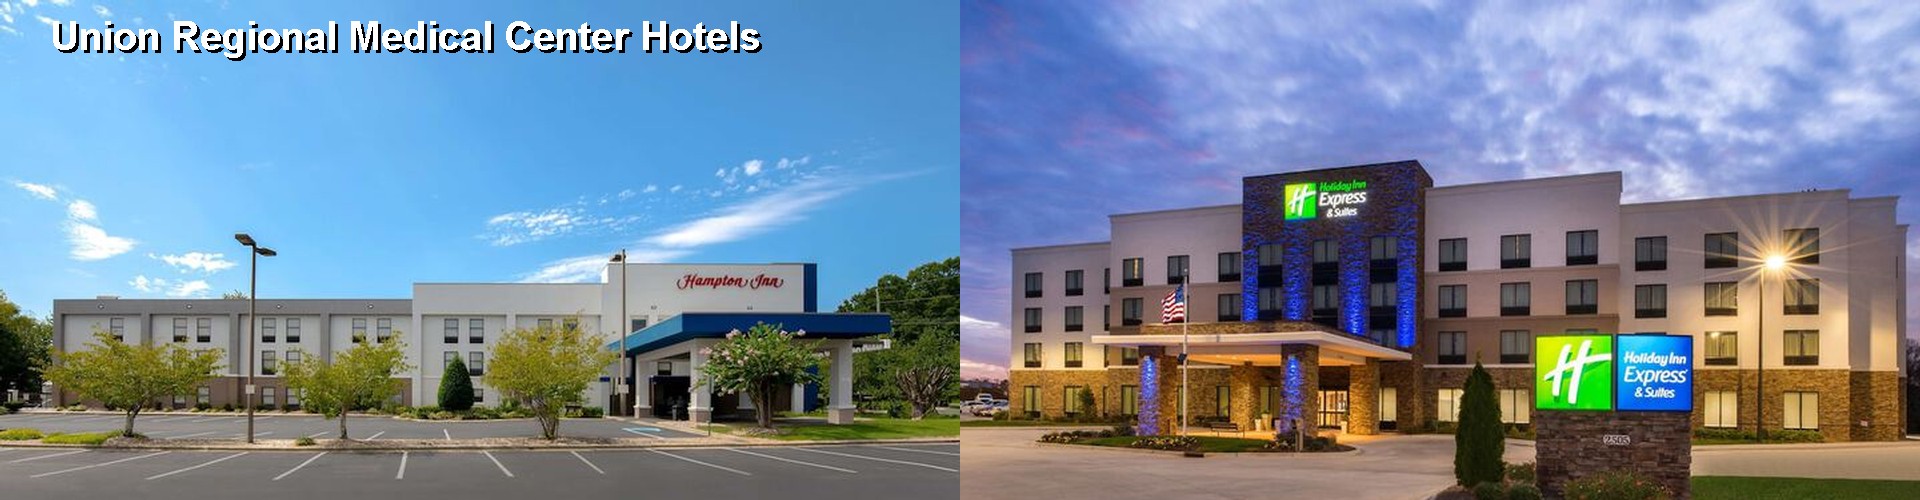 3 Best Hotels near Union Regional Medical Center